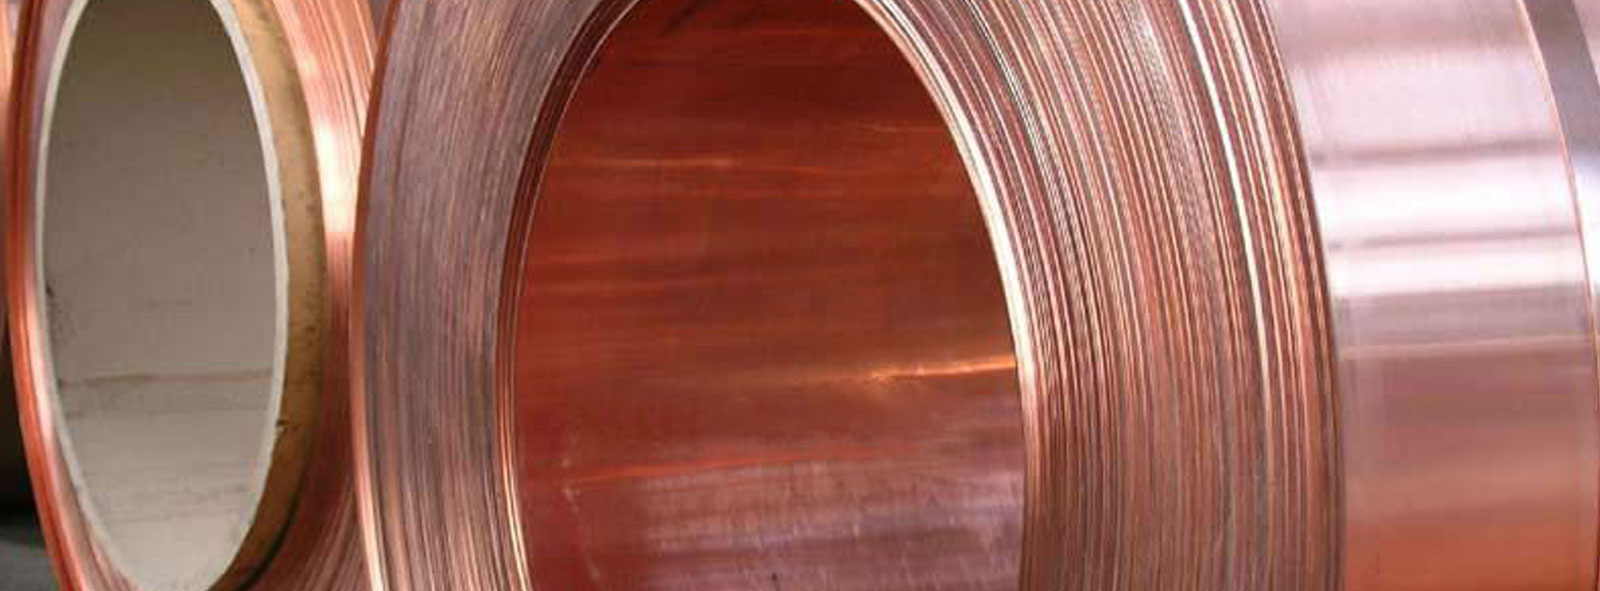 copper in india